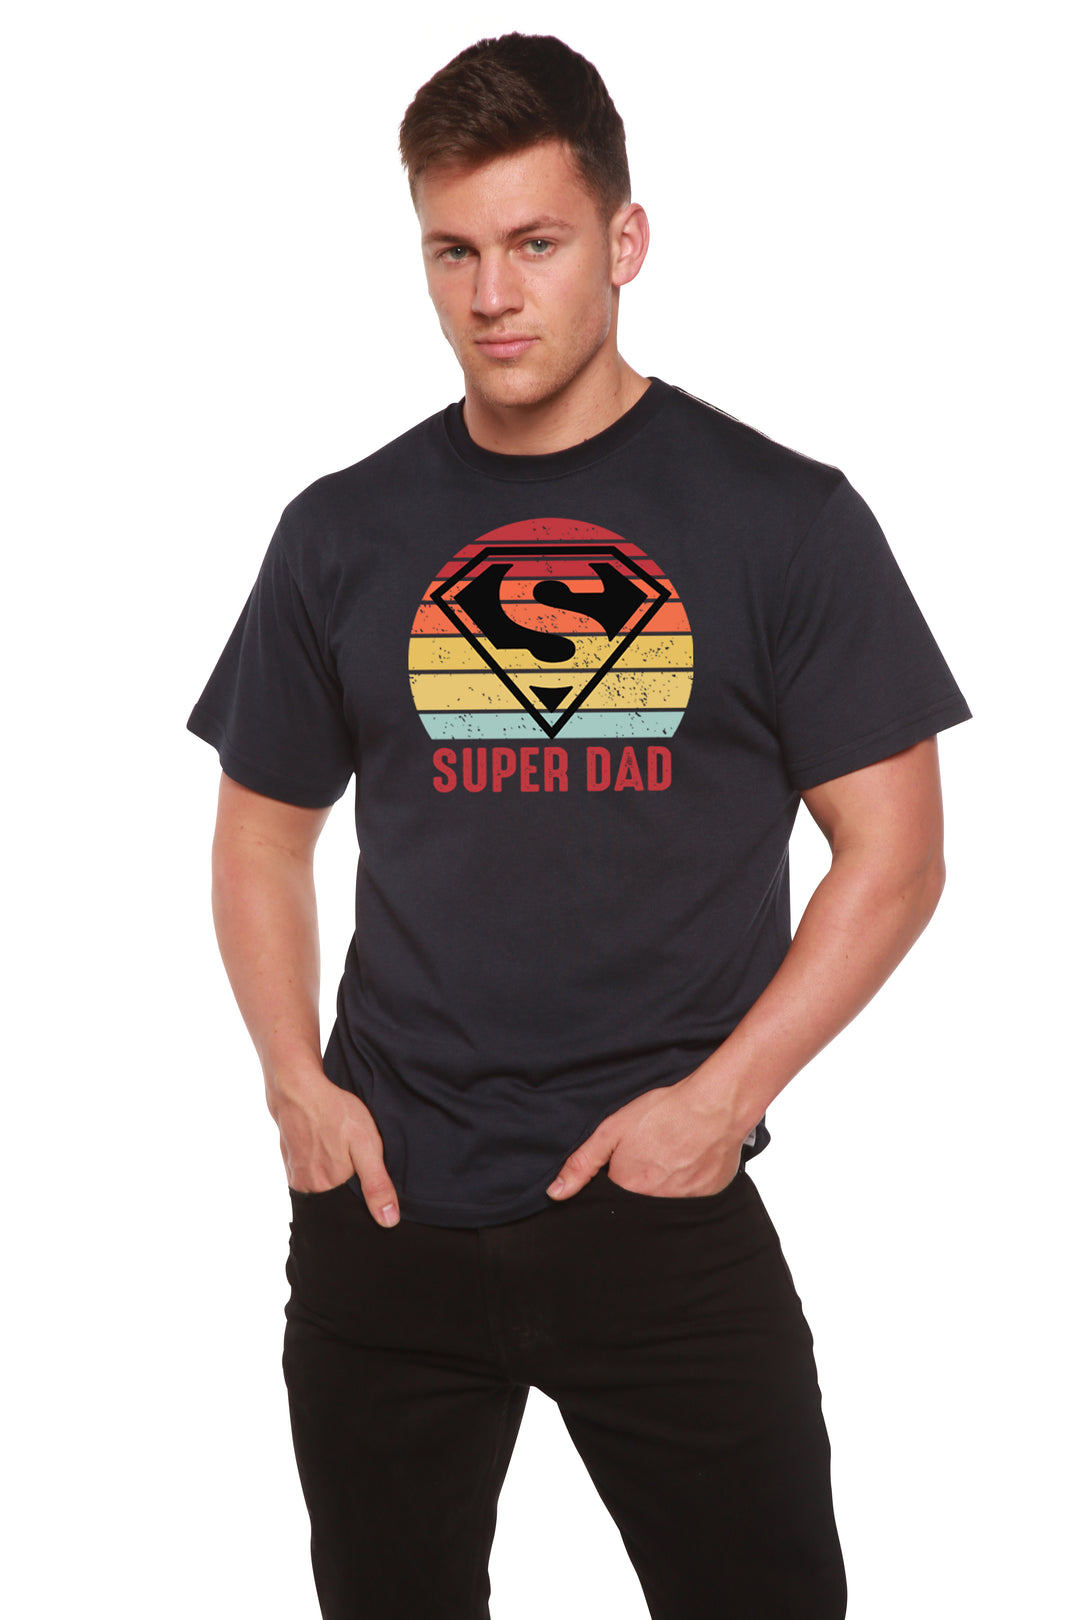 Super Dad Men's Bamboo Viscose/Organic Cotton Short Sleeve T-Shirt - Spun Bamboo